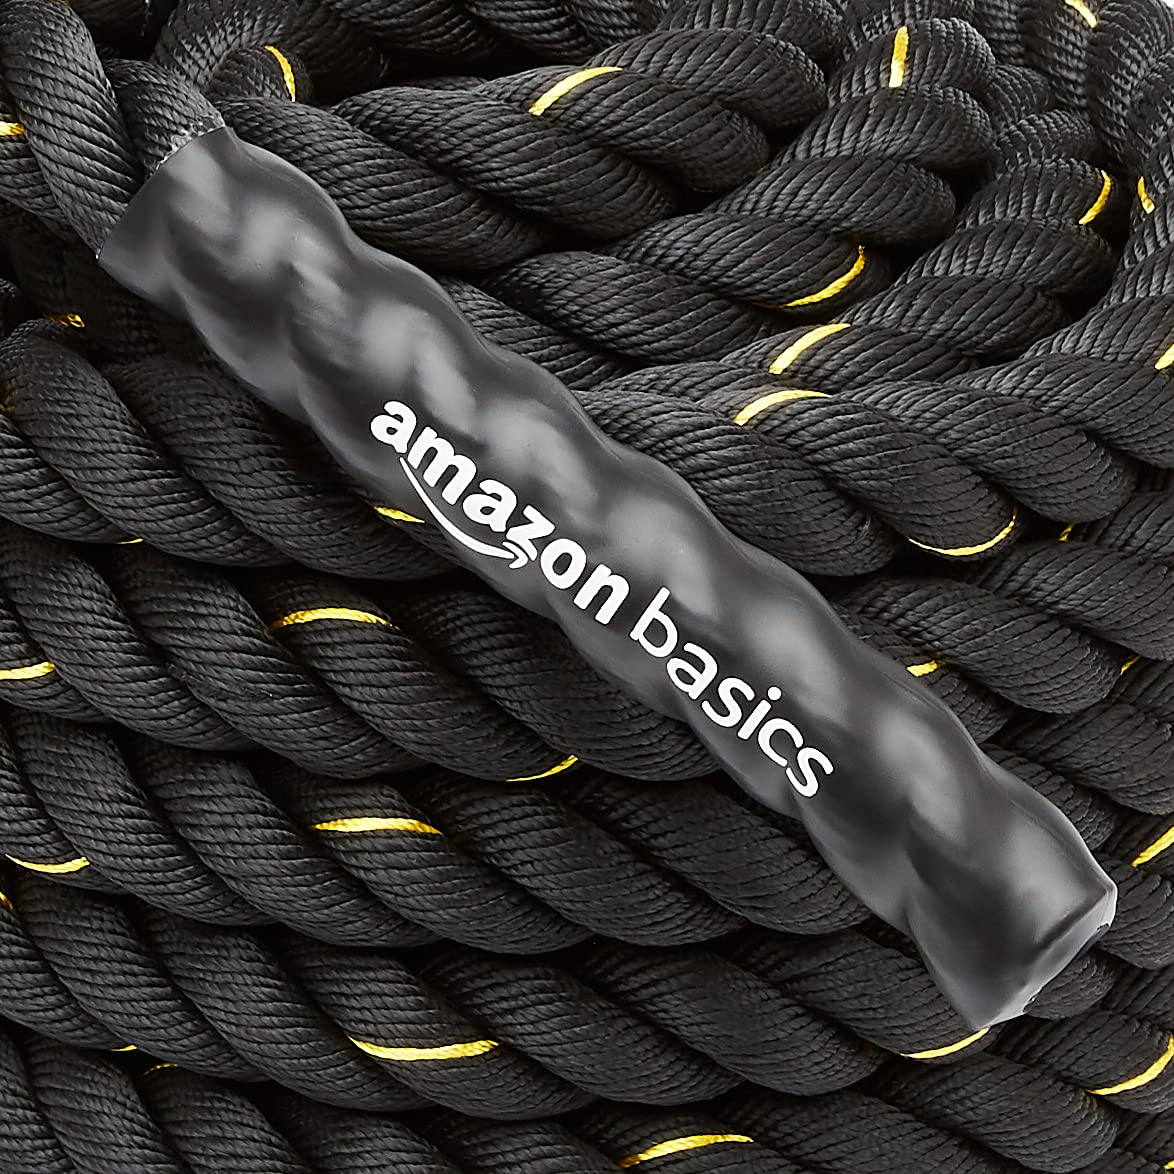 Amazon Basics Battle Exercise Training Rope - 30/40/50 Foot Lengths, 1.5/2 Inch Widths